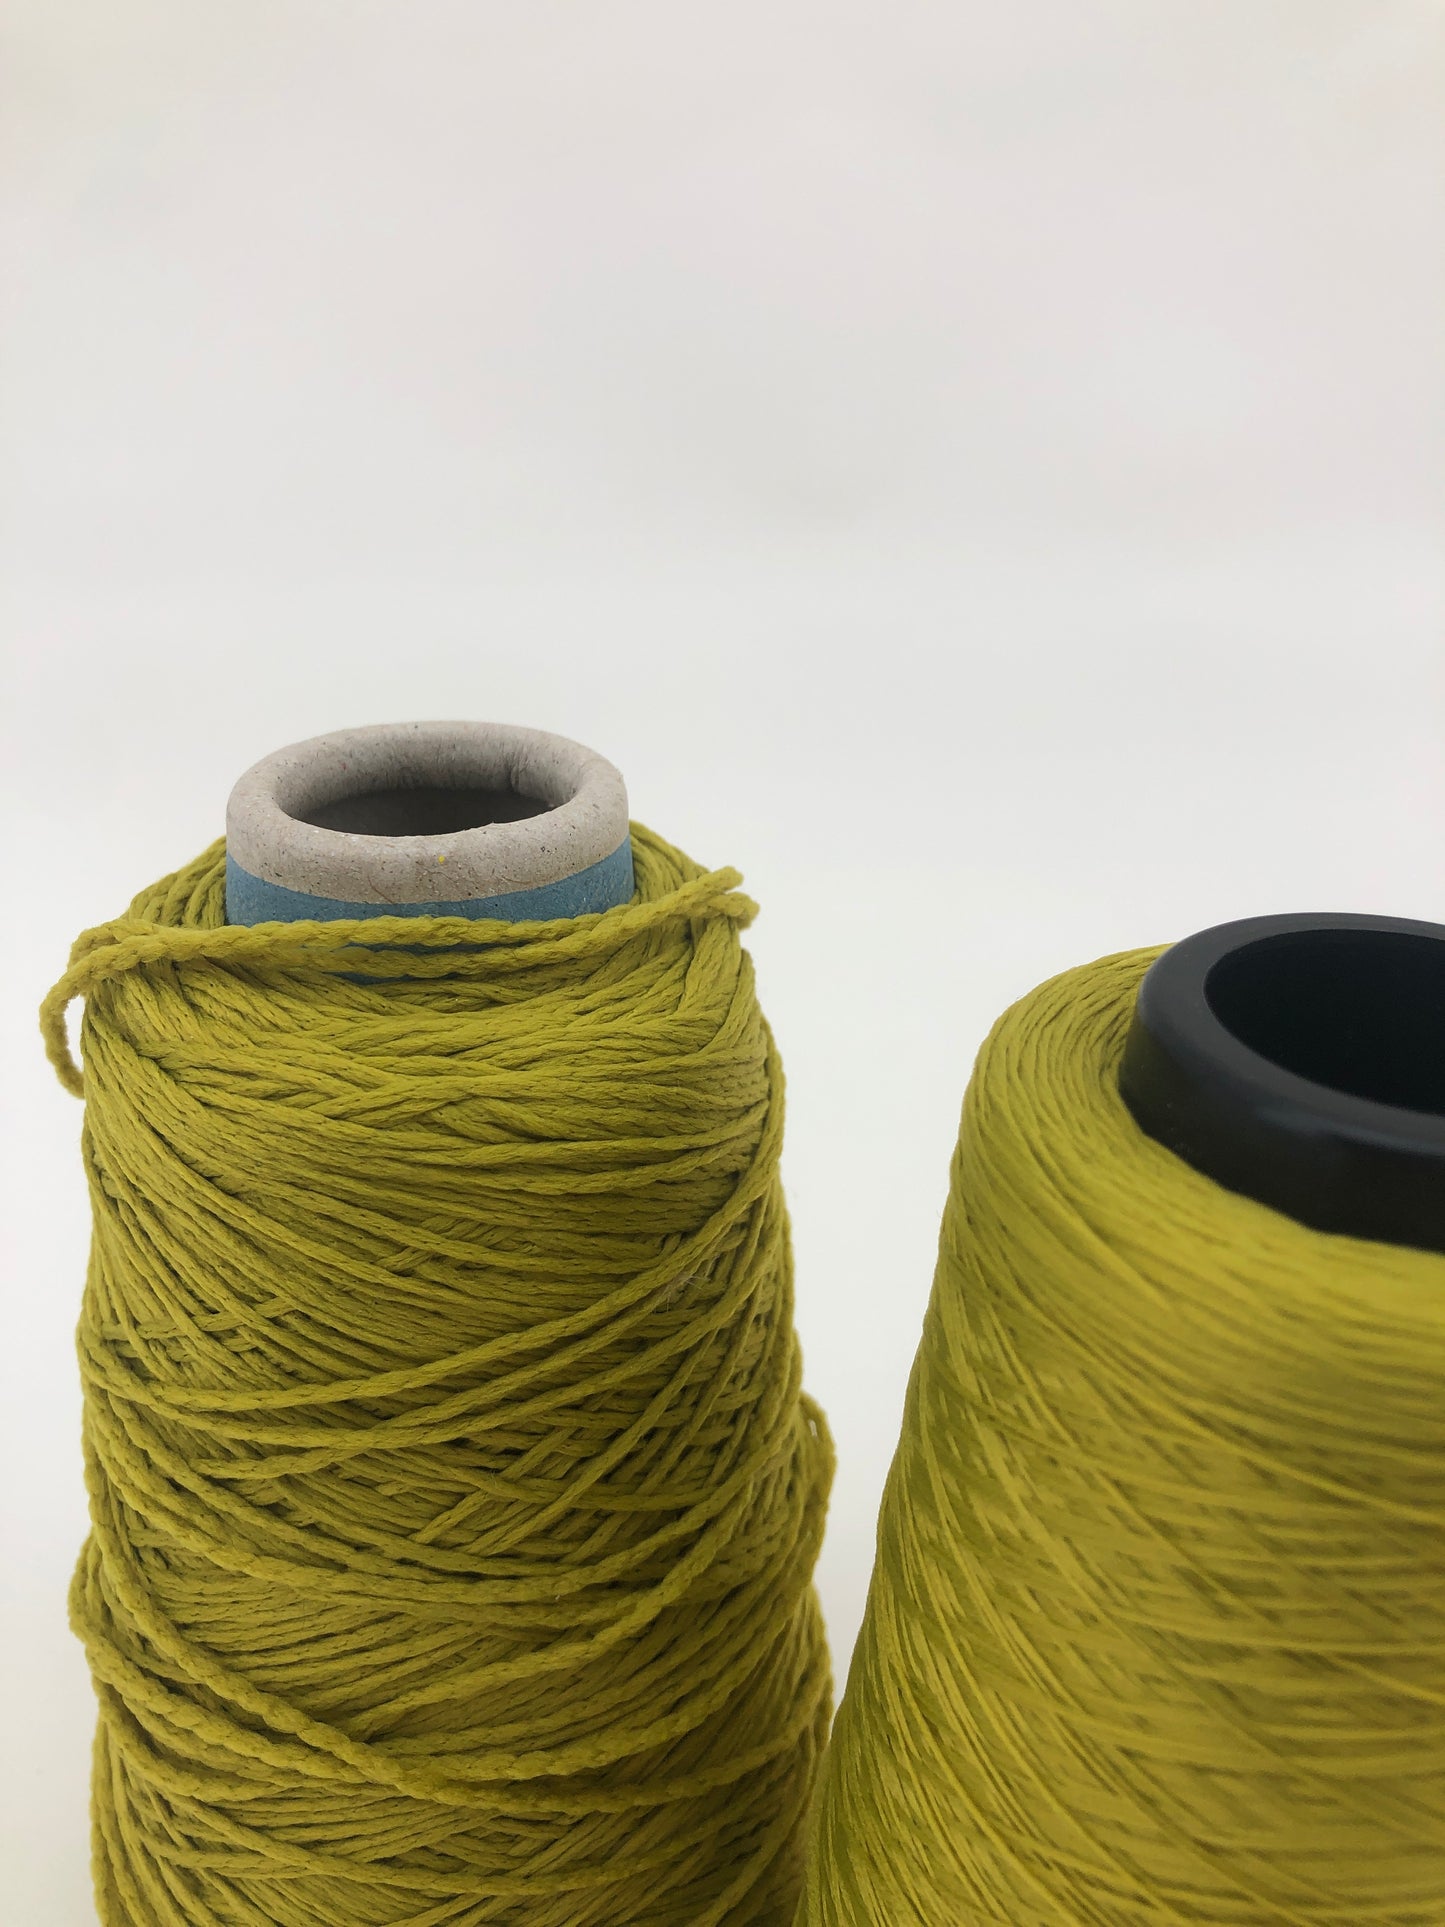 Yarn Cones, Yellow - 500g